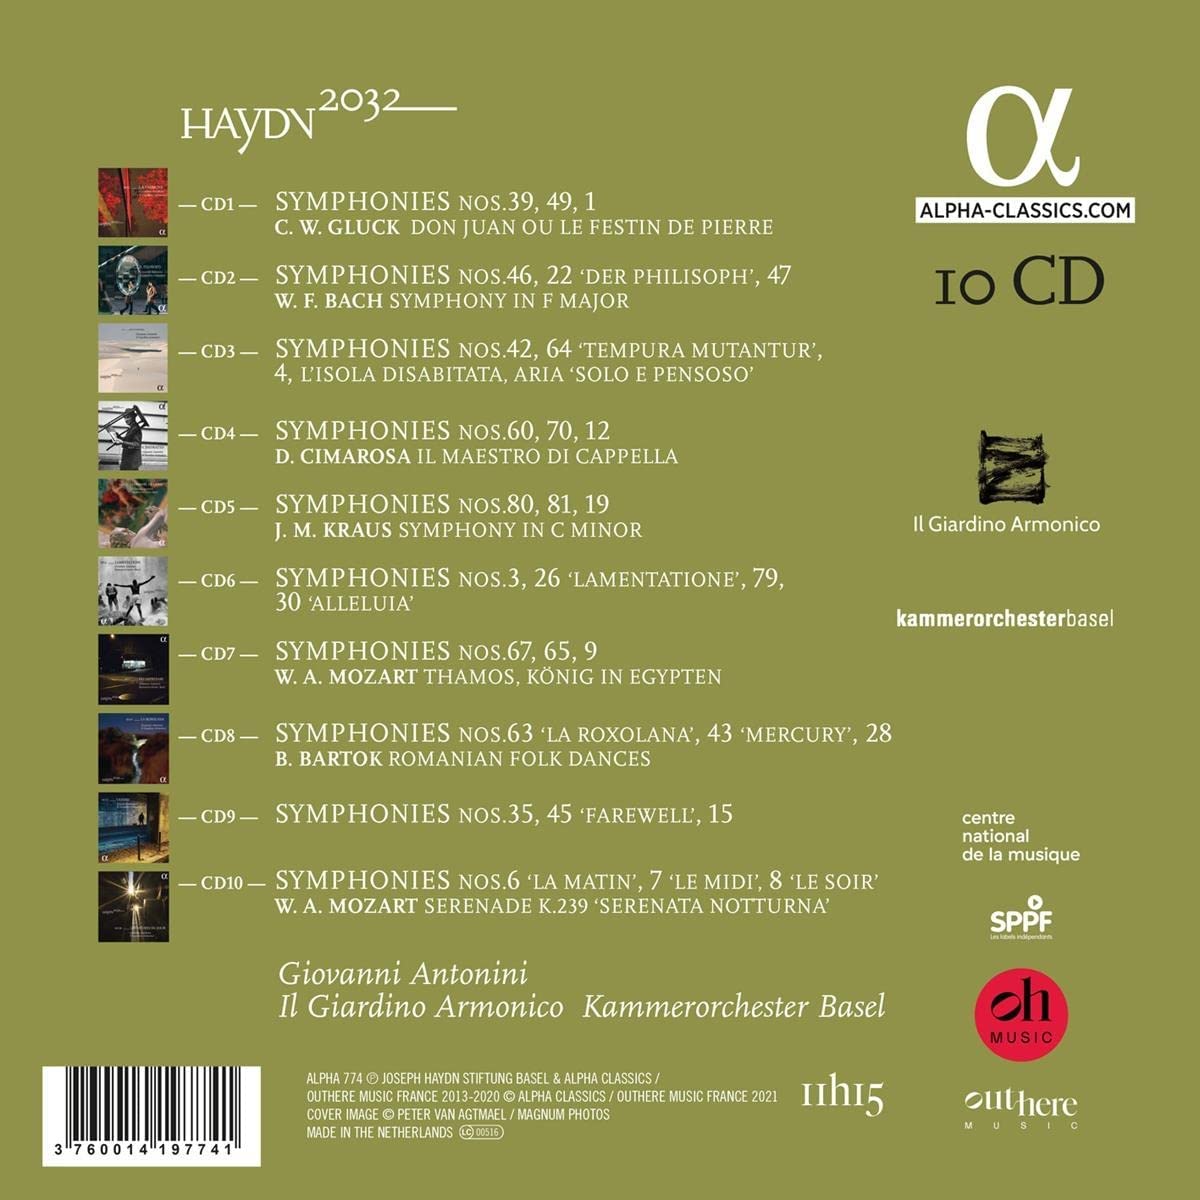 Giovanni Antonini/Kammerorchester Basel - Haydn Vol. 1-10 The Symphonies - 10 CD